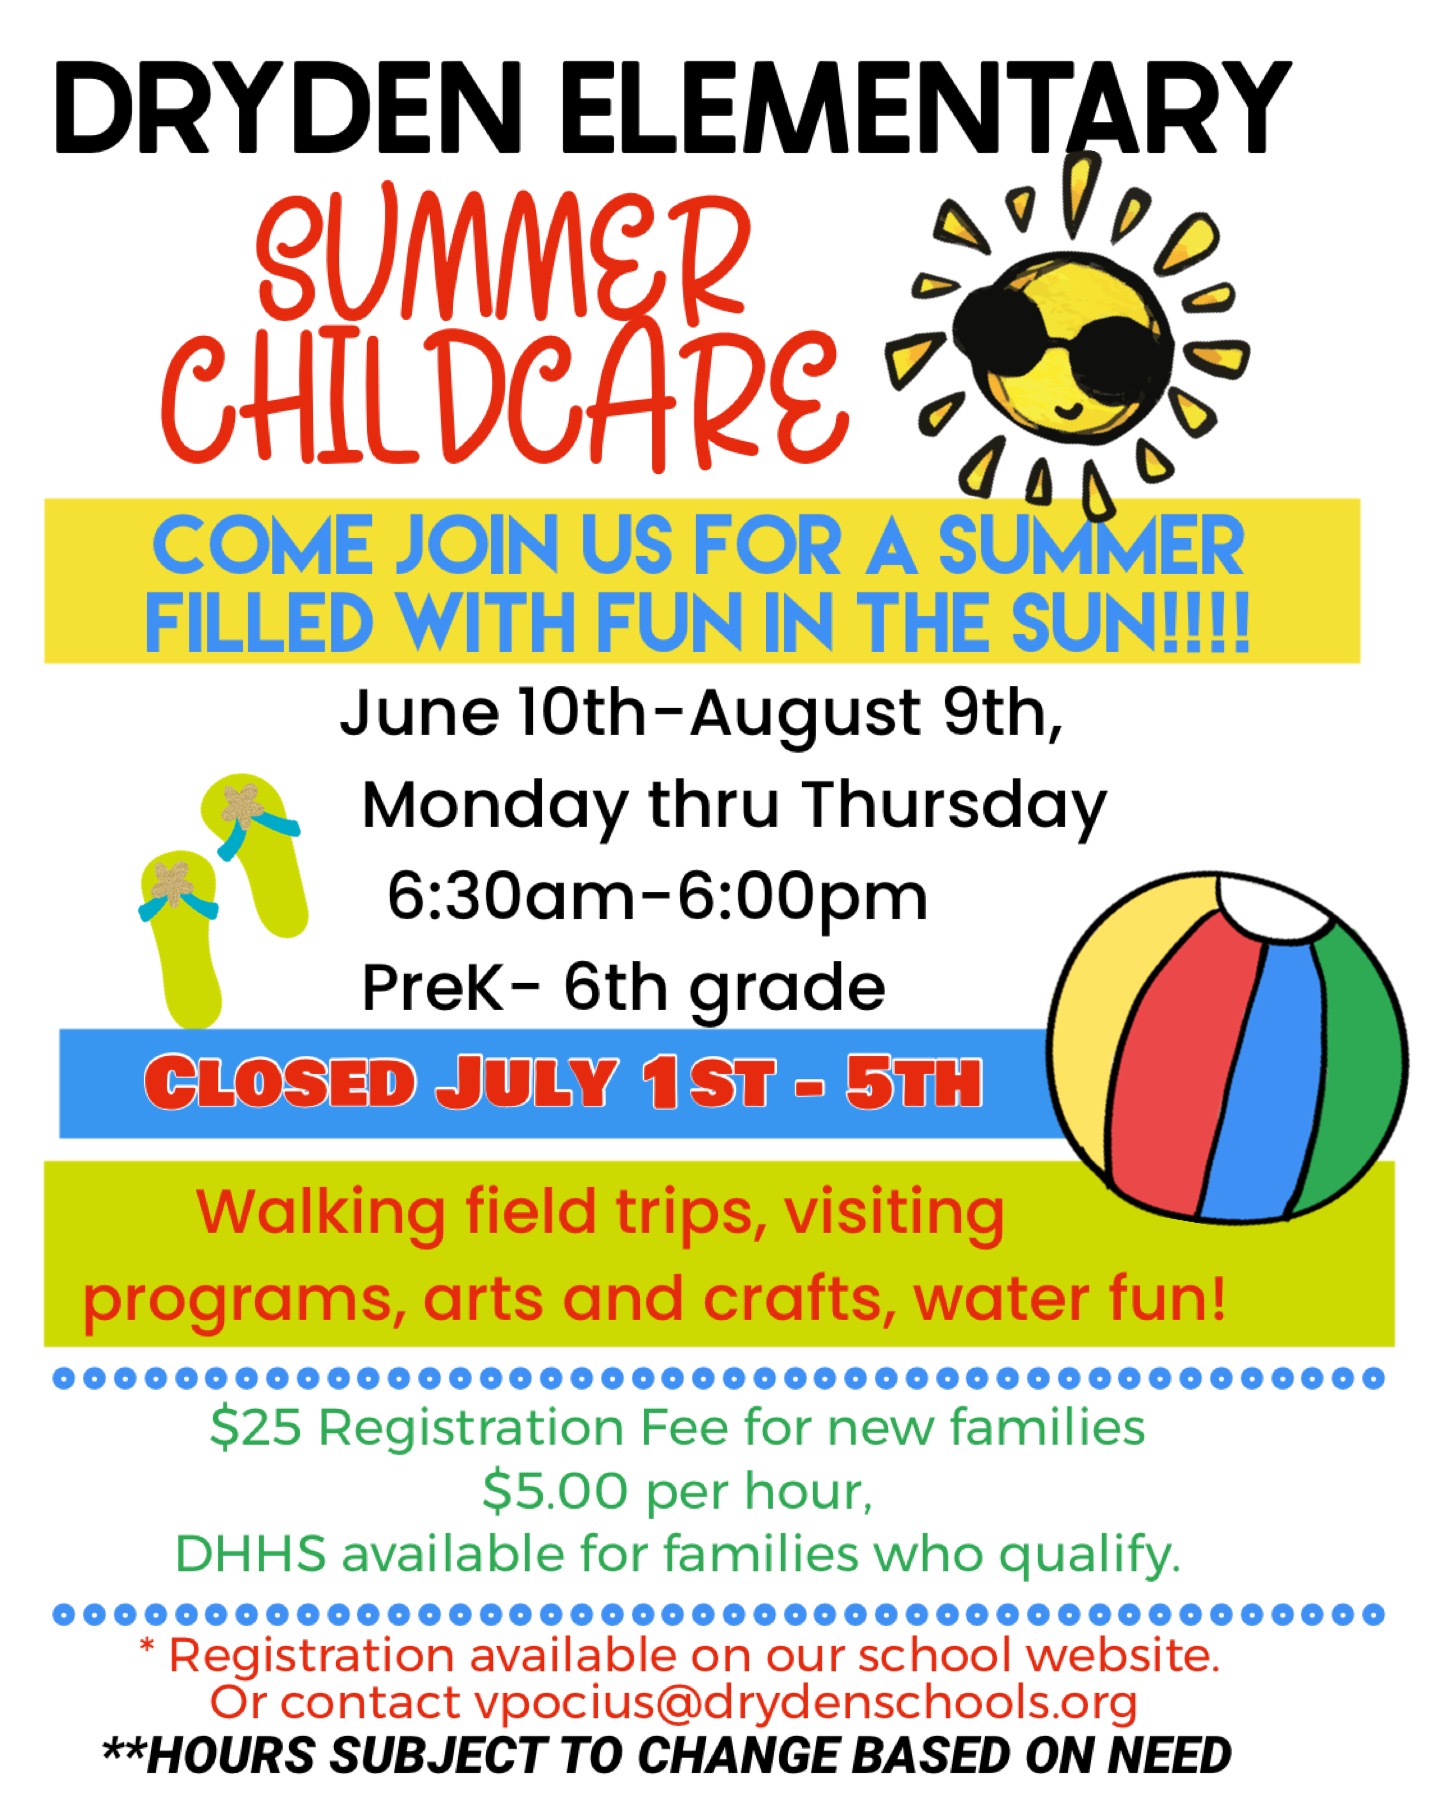 Summer Childcare Flyer